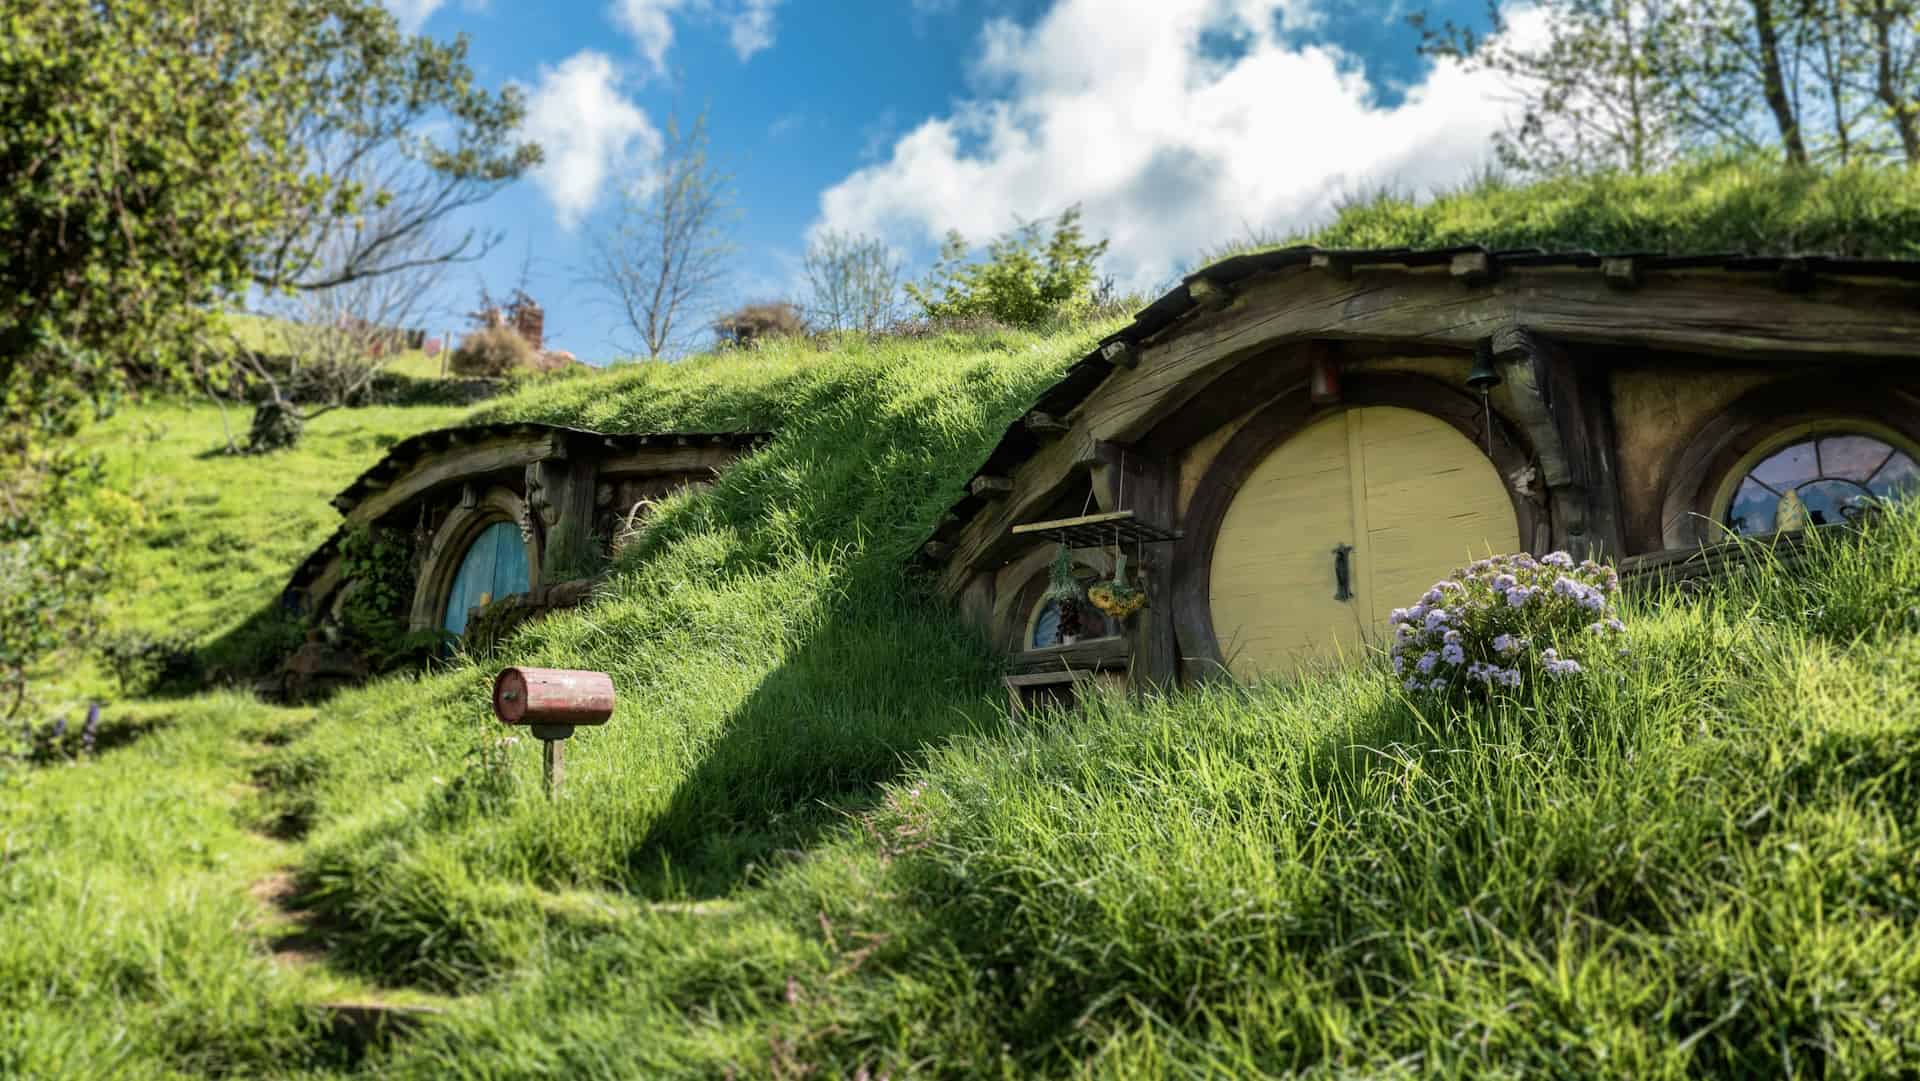 Hobbiton Movie Set, New Zealand